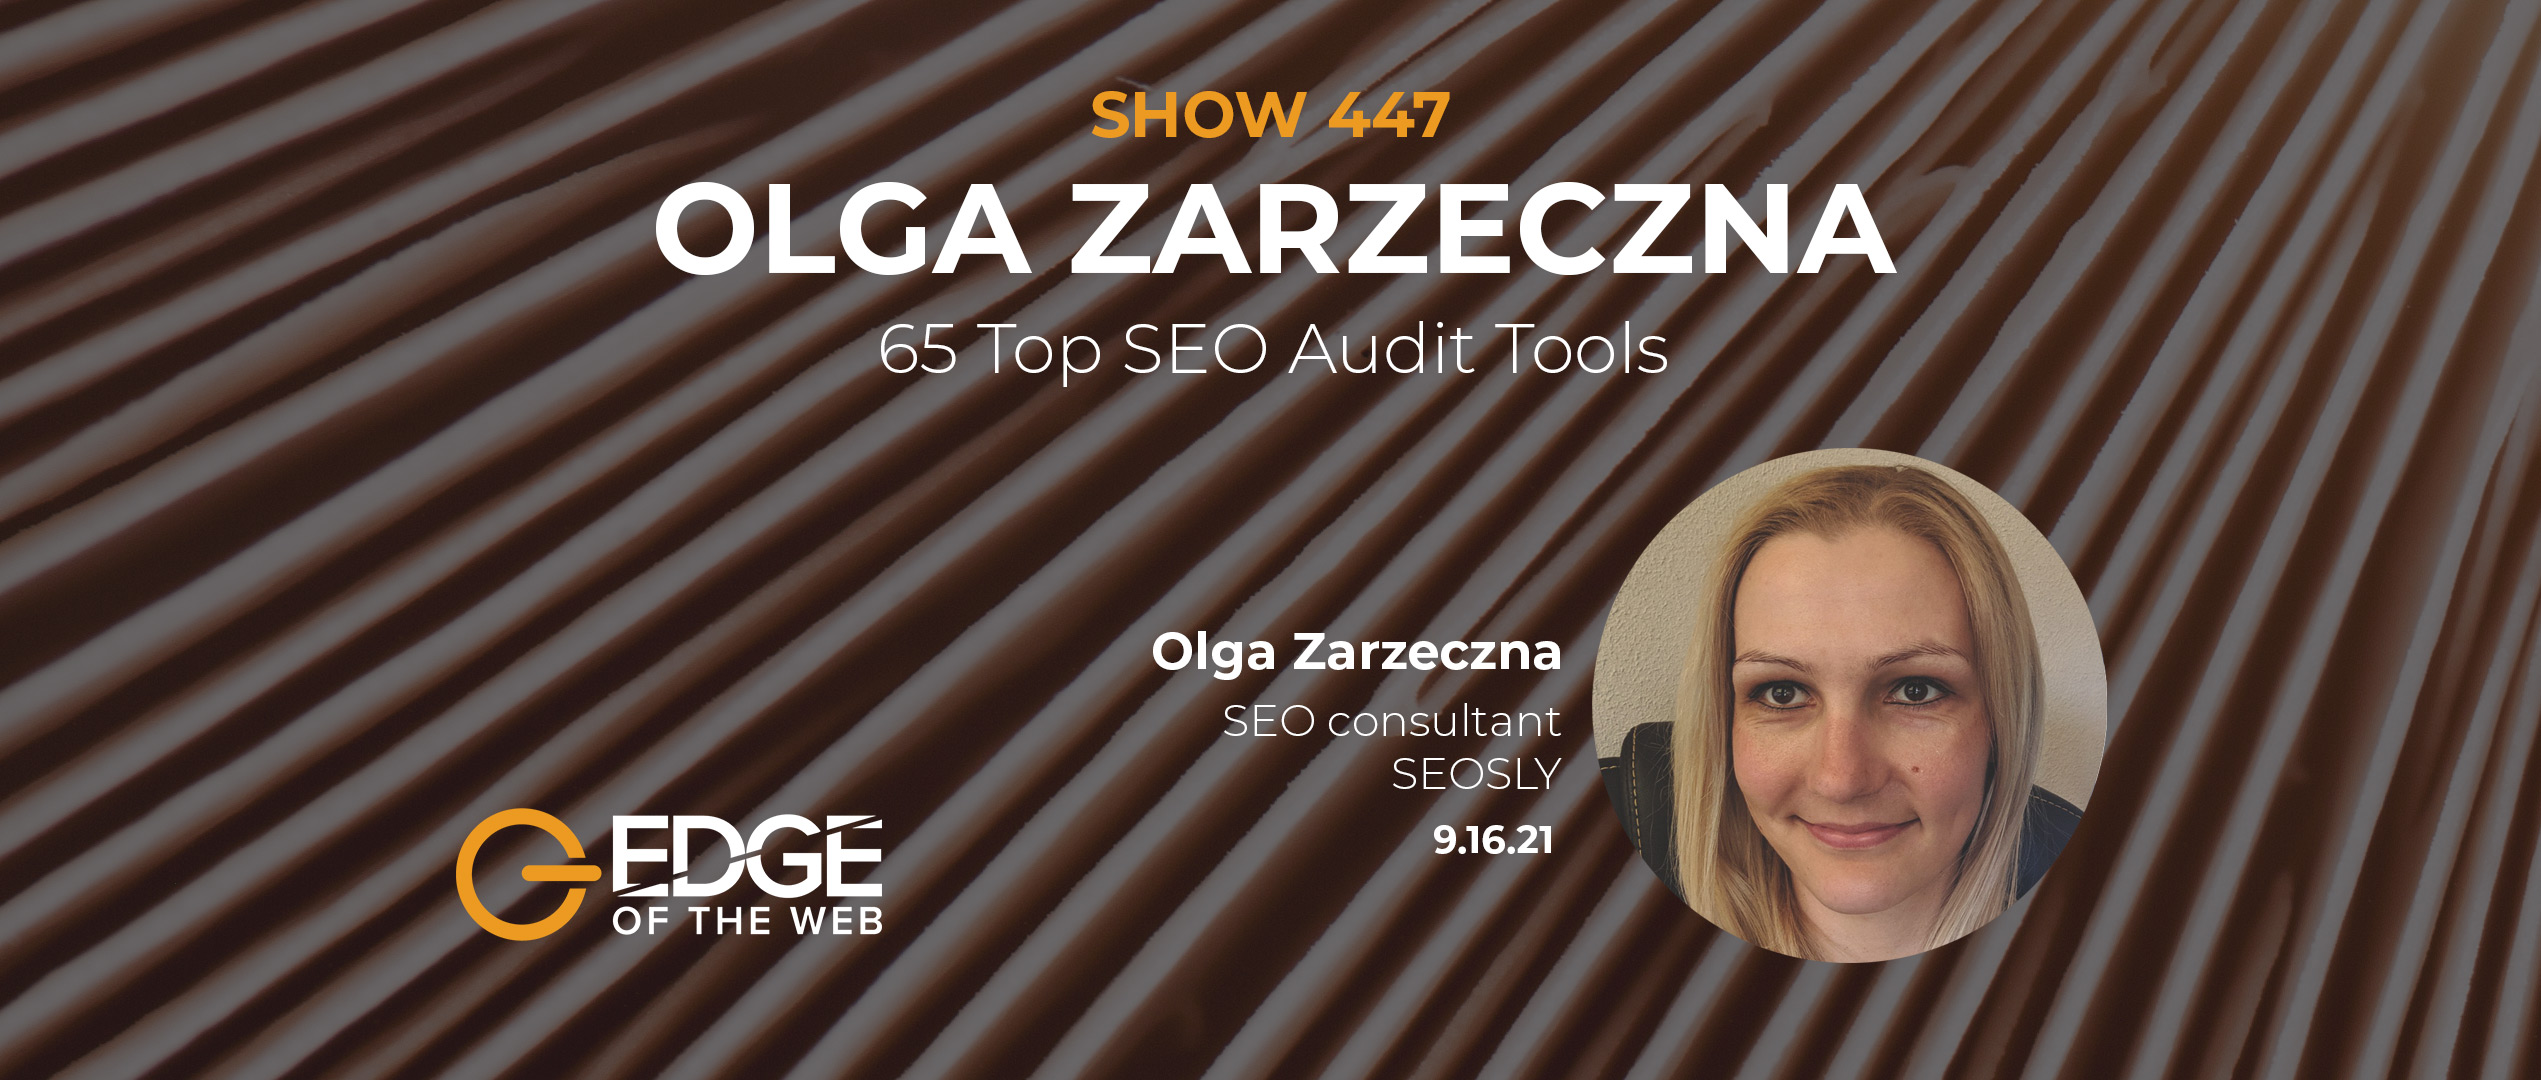 447 | 65 Top SEO Audit Tools from Olga Zarzeczna